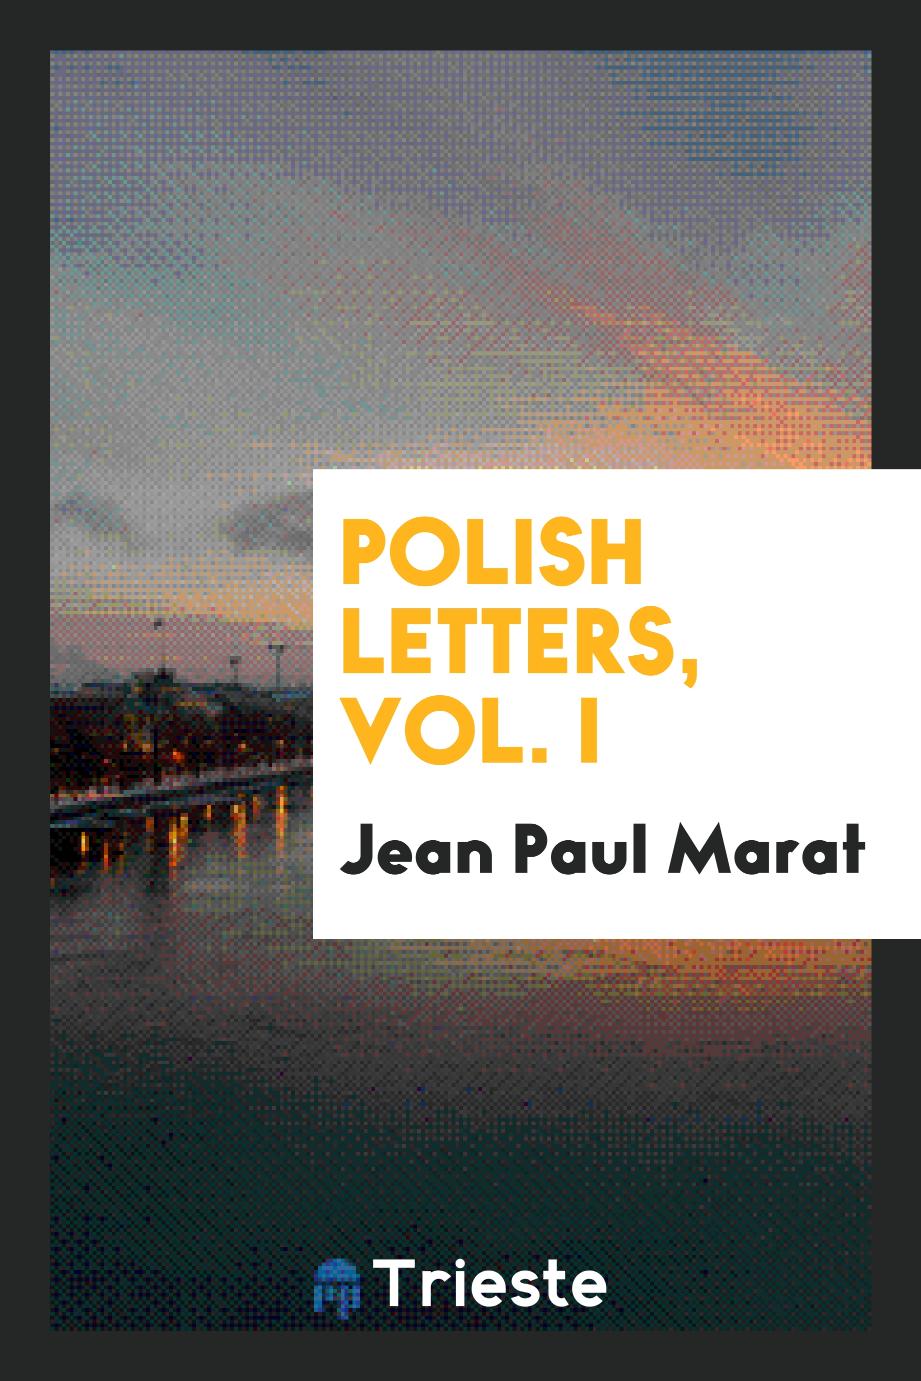 Polish letters, Vol. I